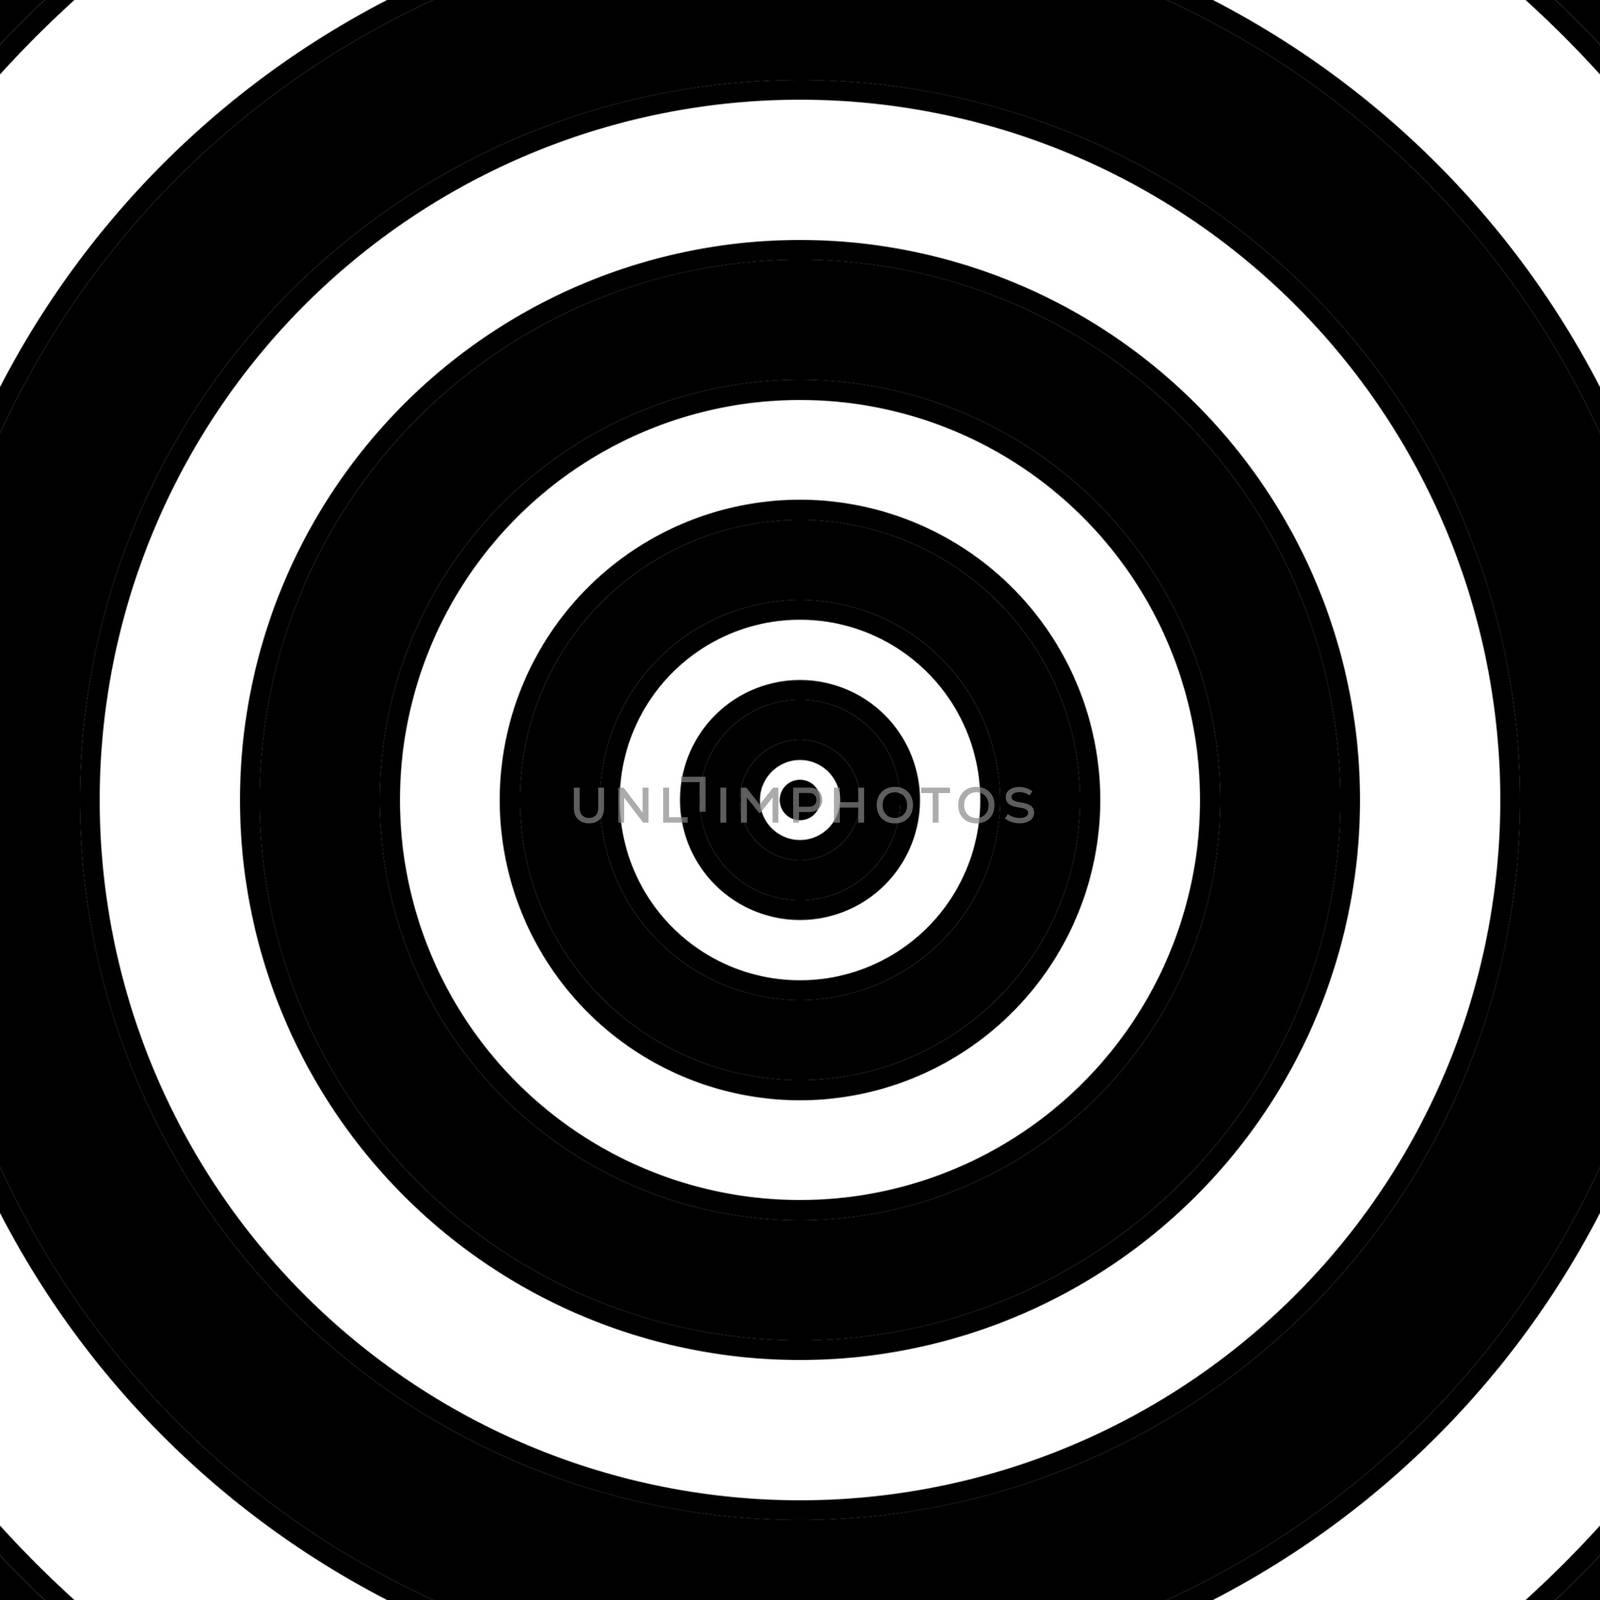 Illustration of black and white circular target.